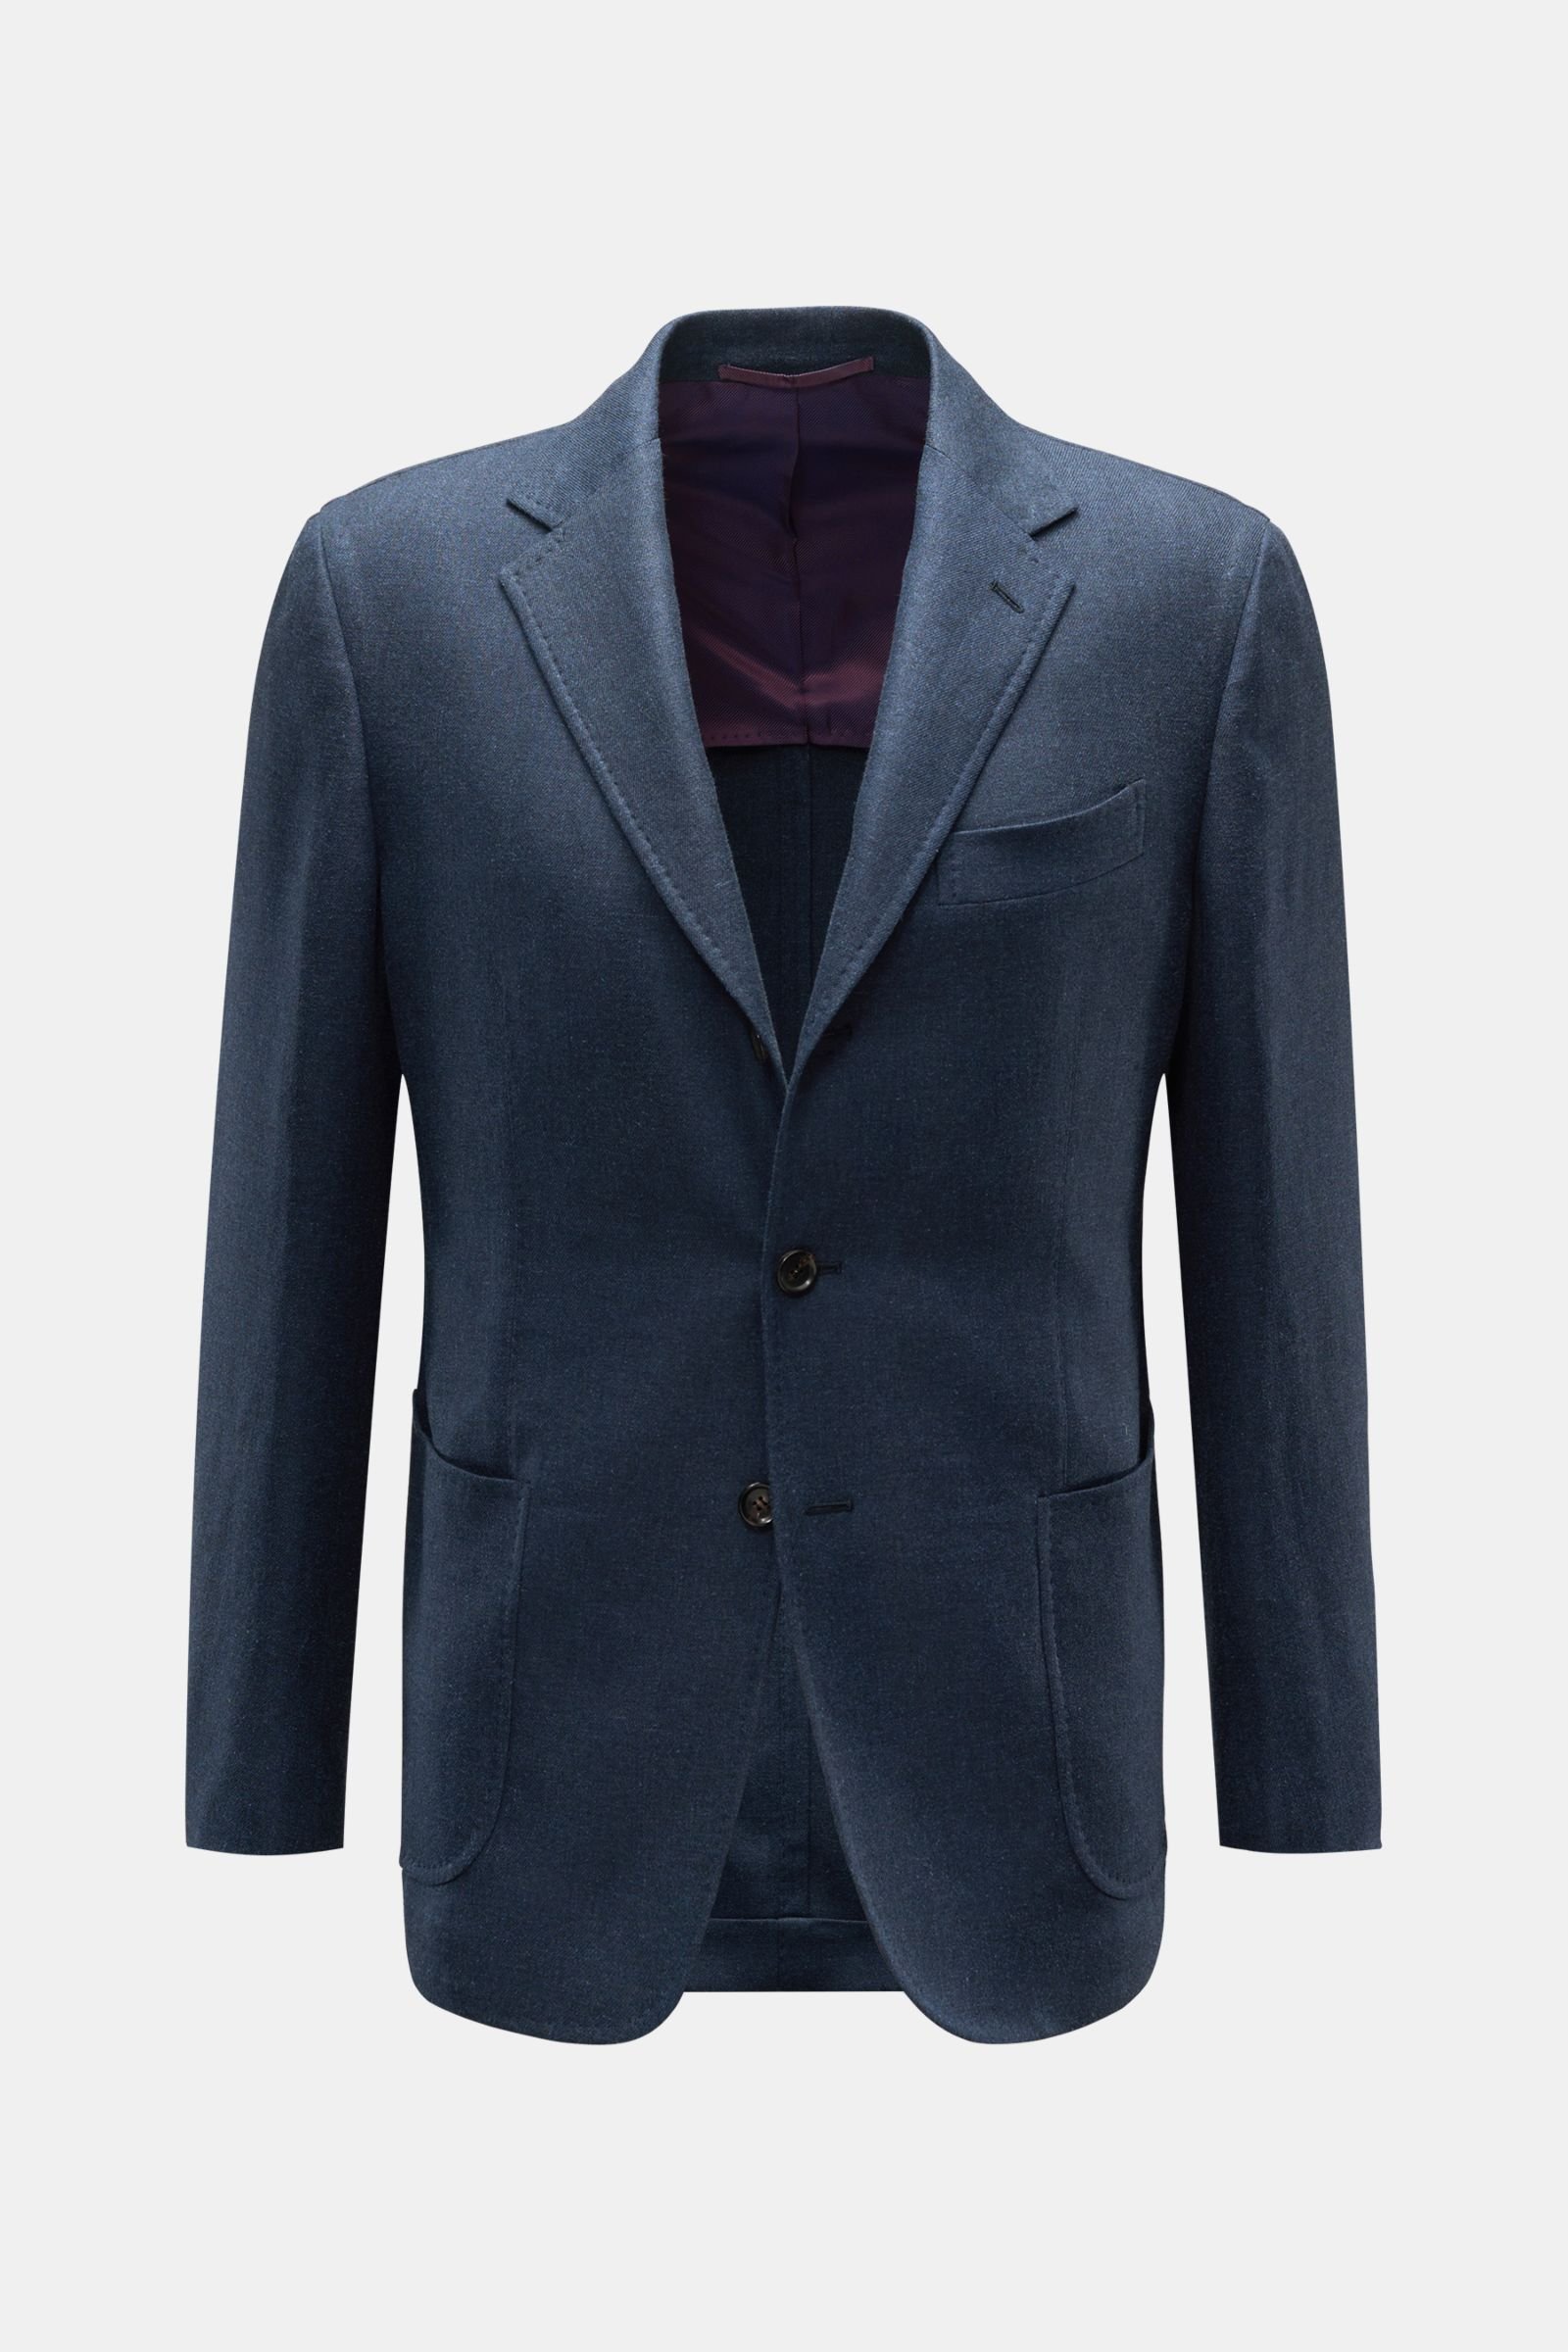 Smart-casual jacket 'Vincenzo' grey-blue